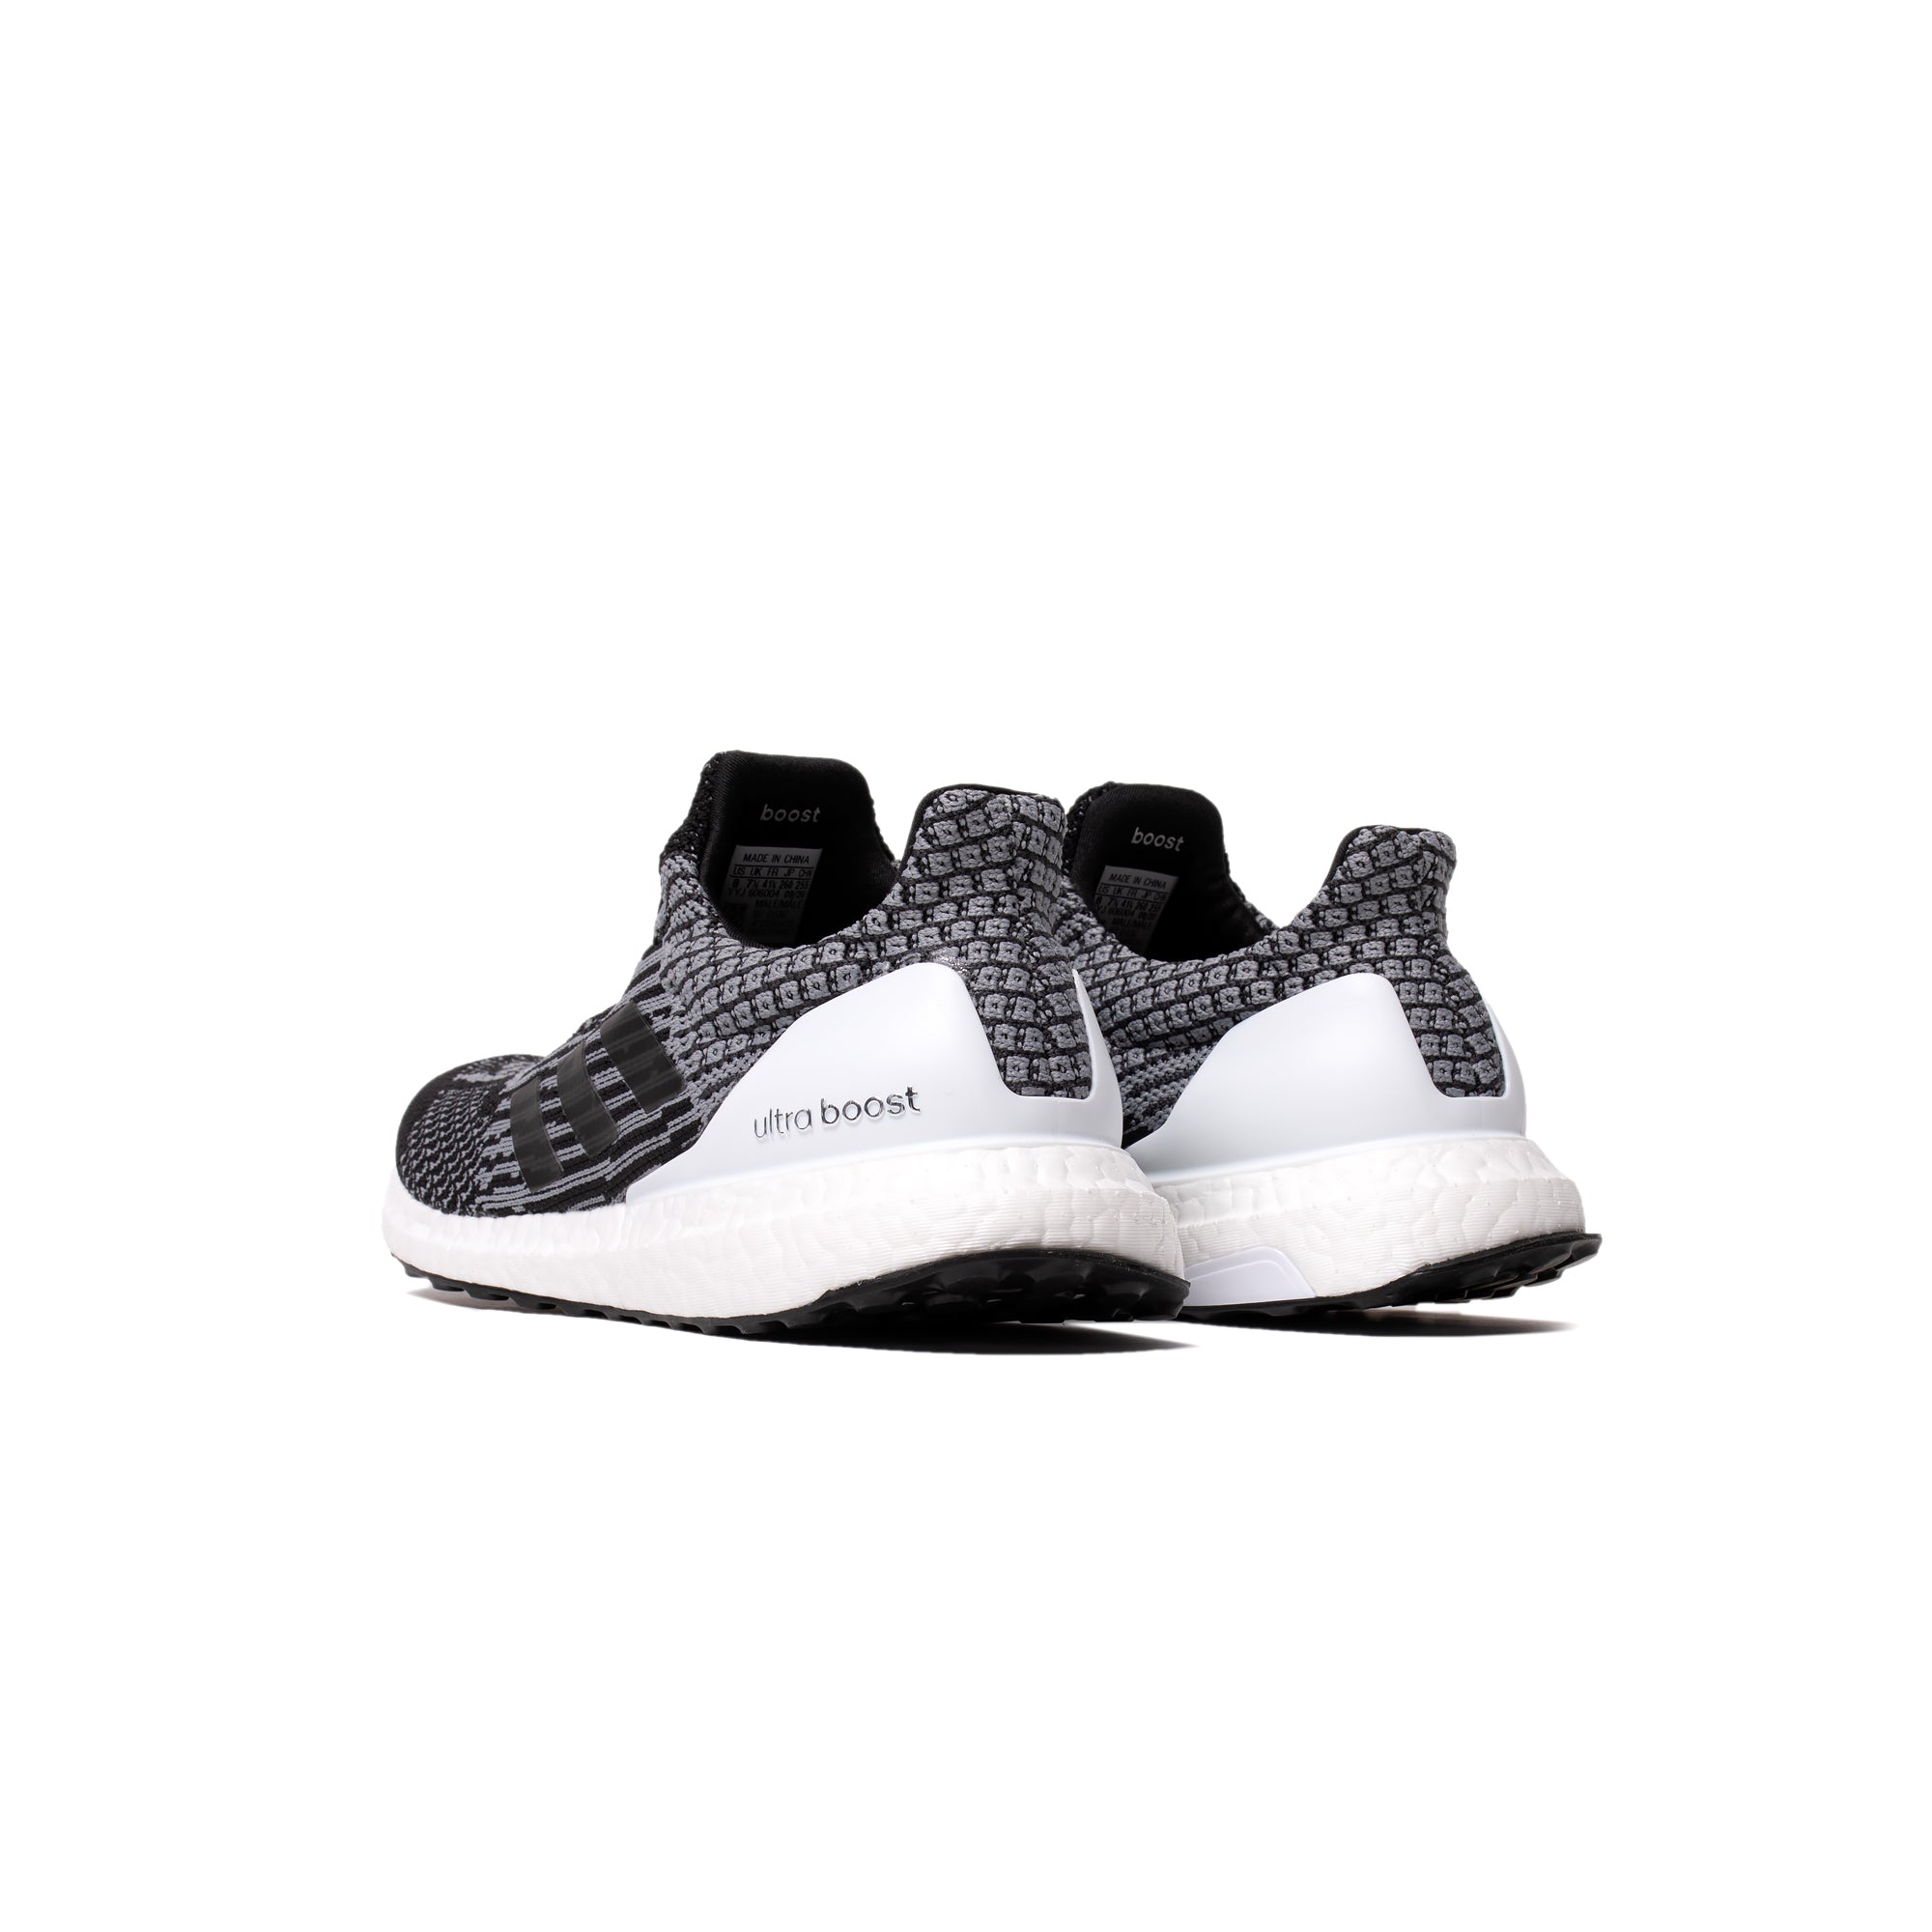 Adidas Men Ultraboost 5.0 Uncaged DNA 'Black Grey' Shoes